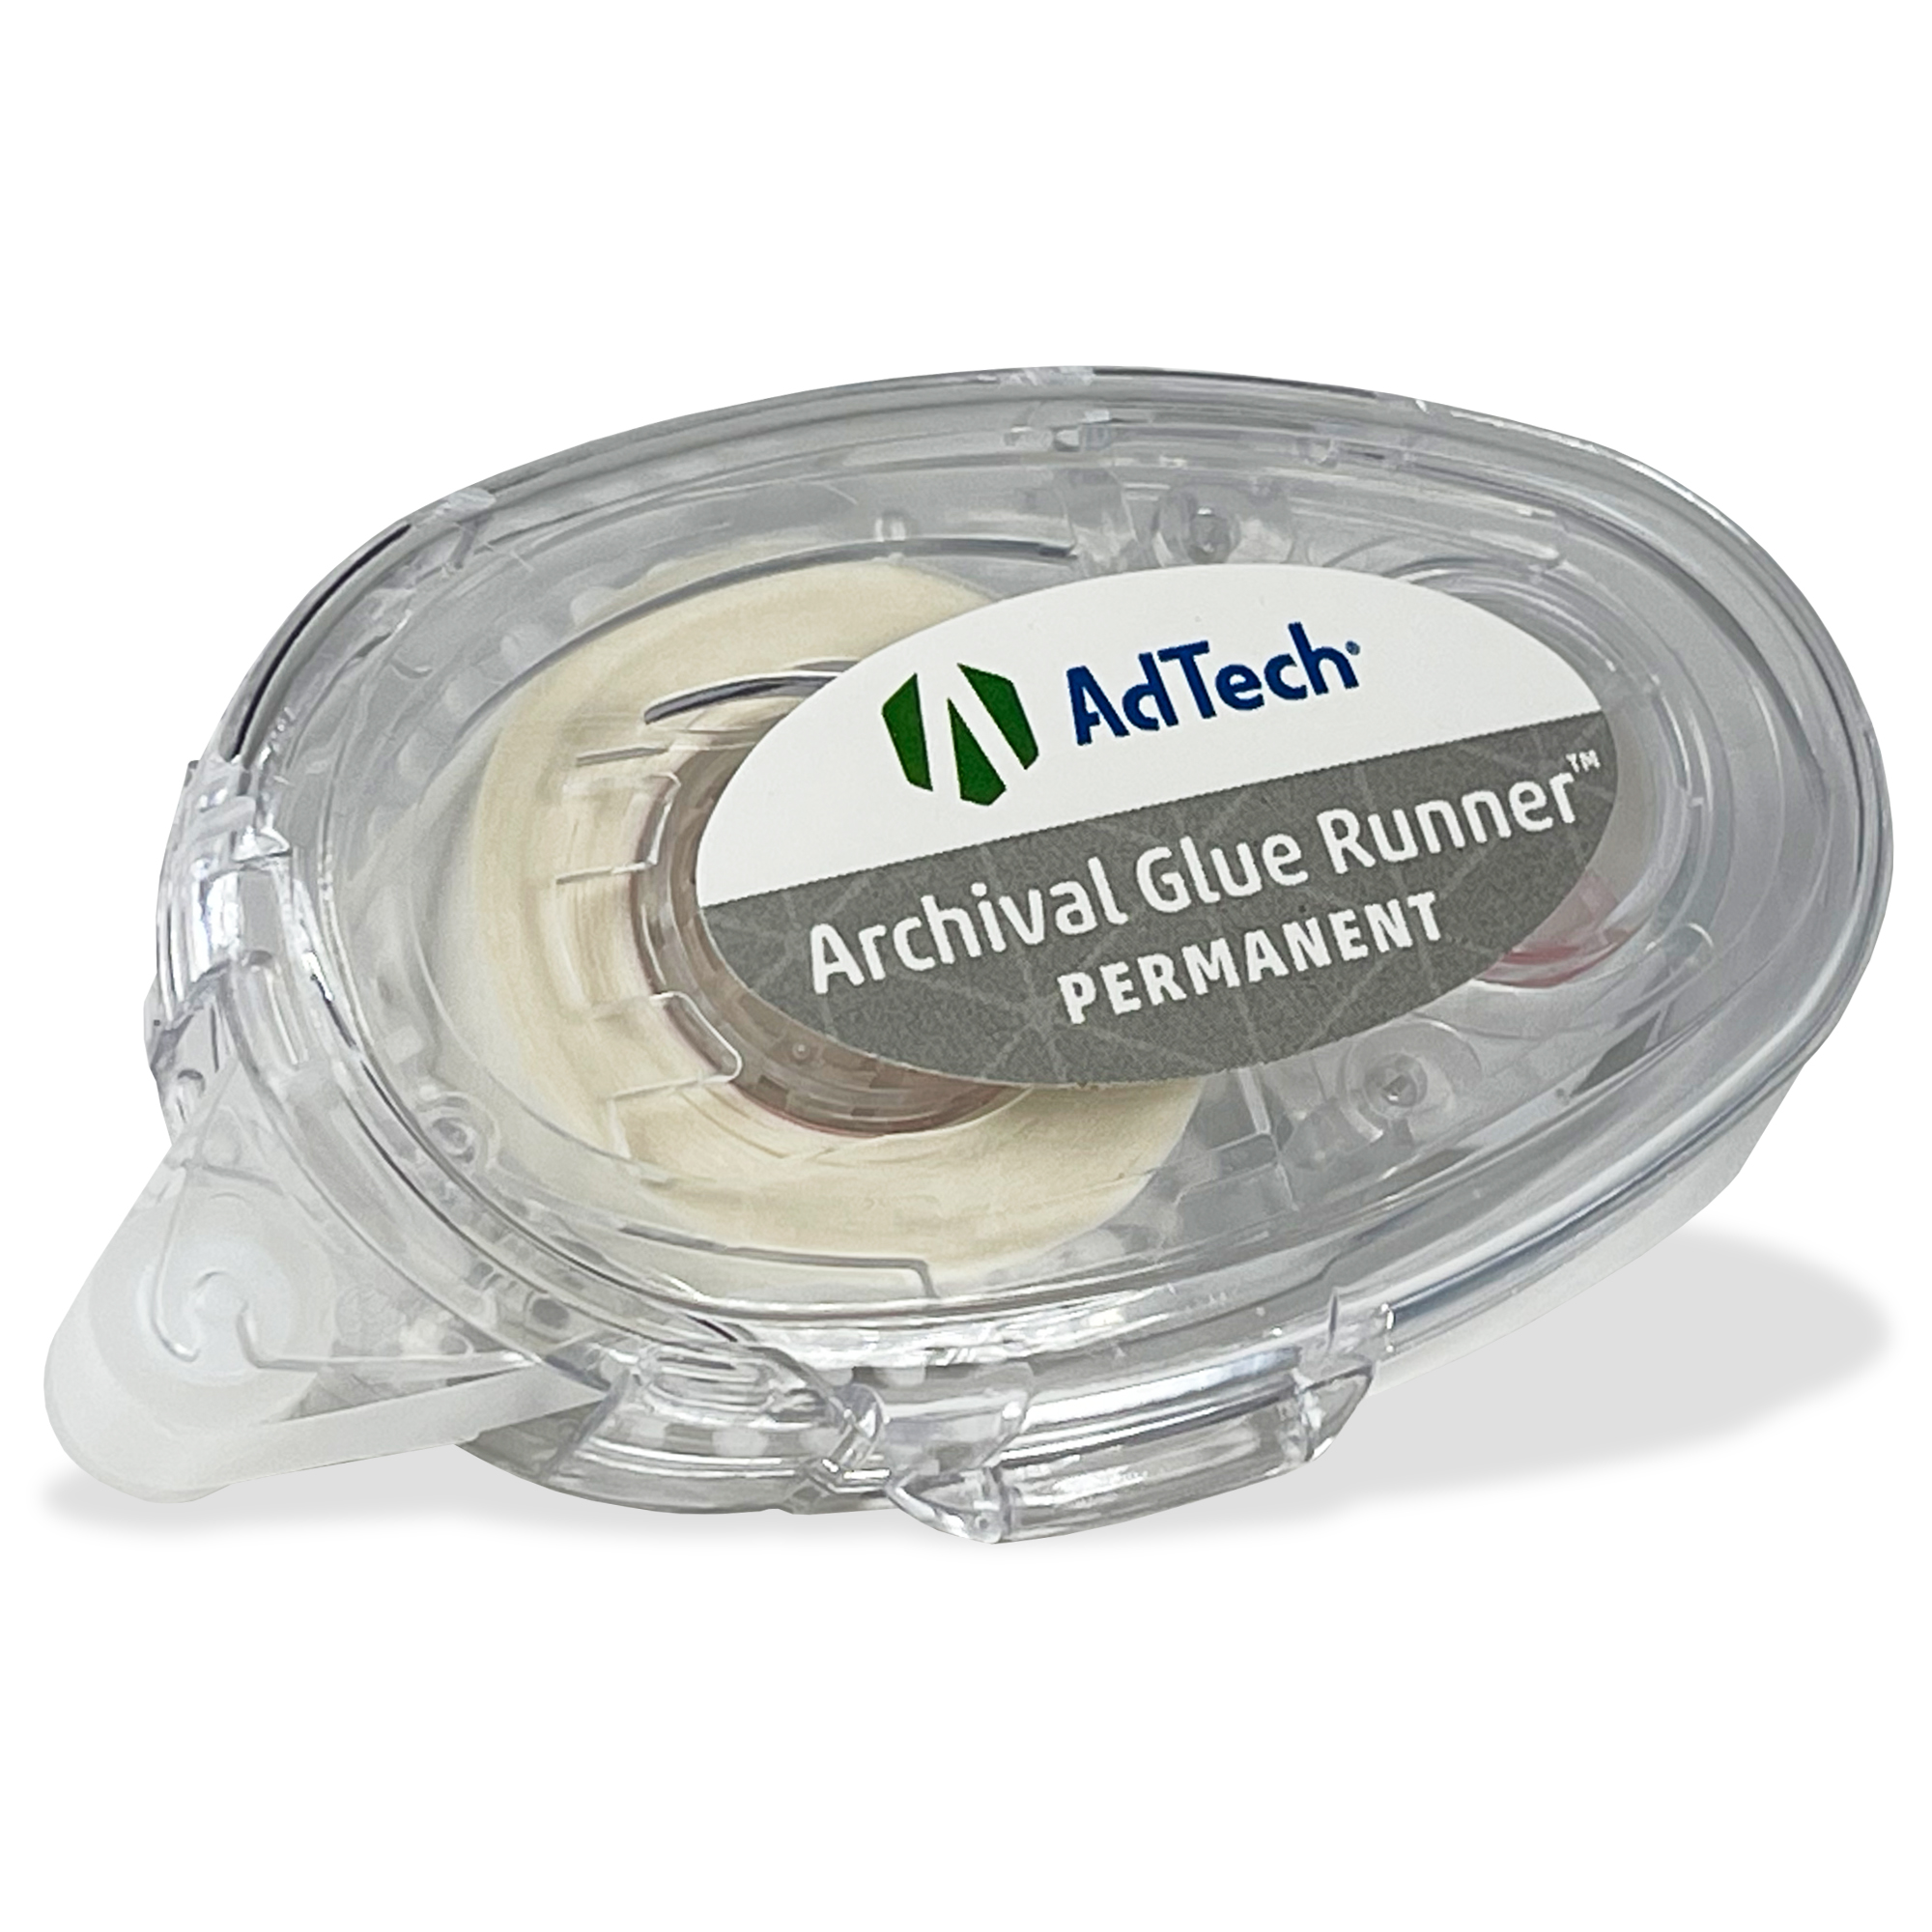 05603 AdTech 4-Pack Permanent Glue Runner - Adhesive Technologies